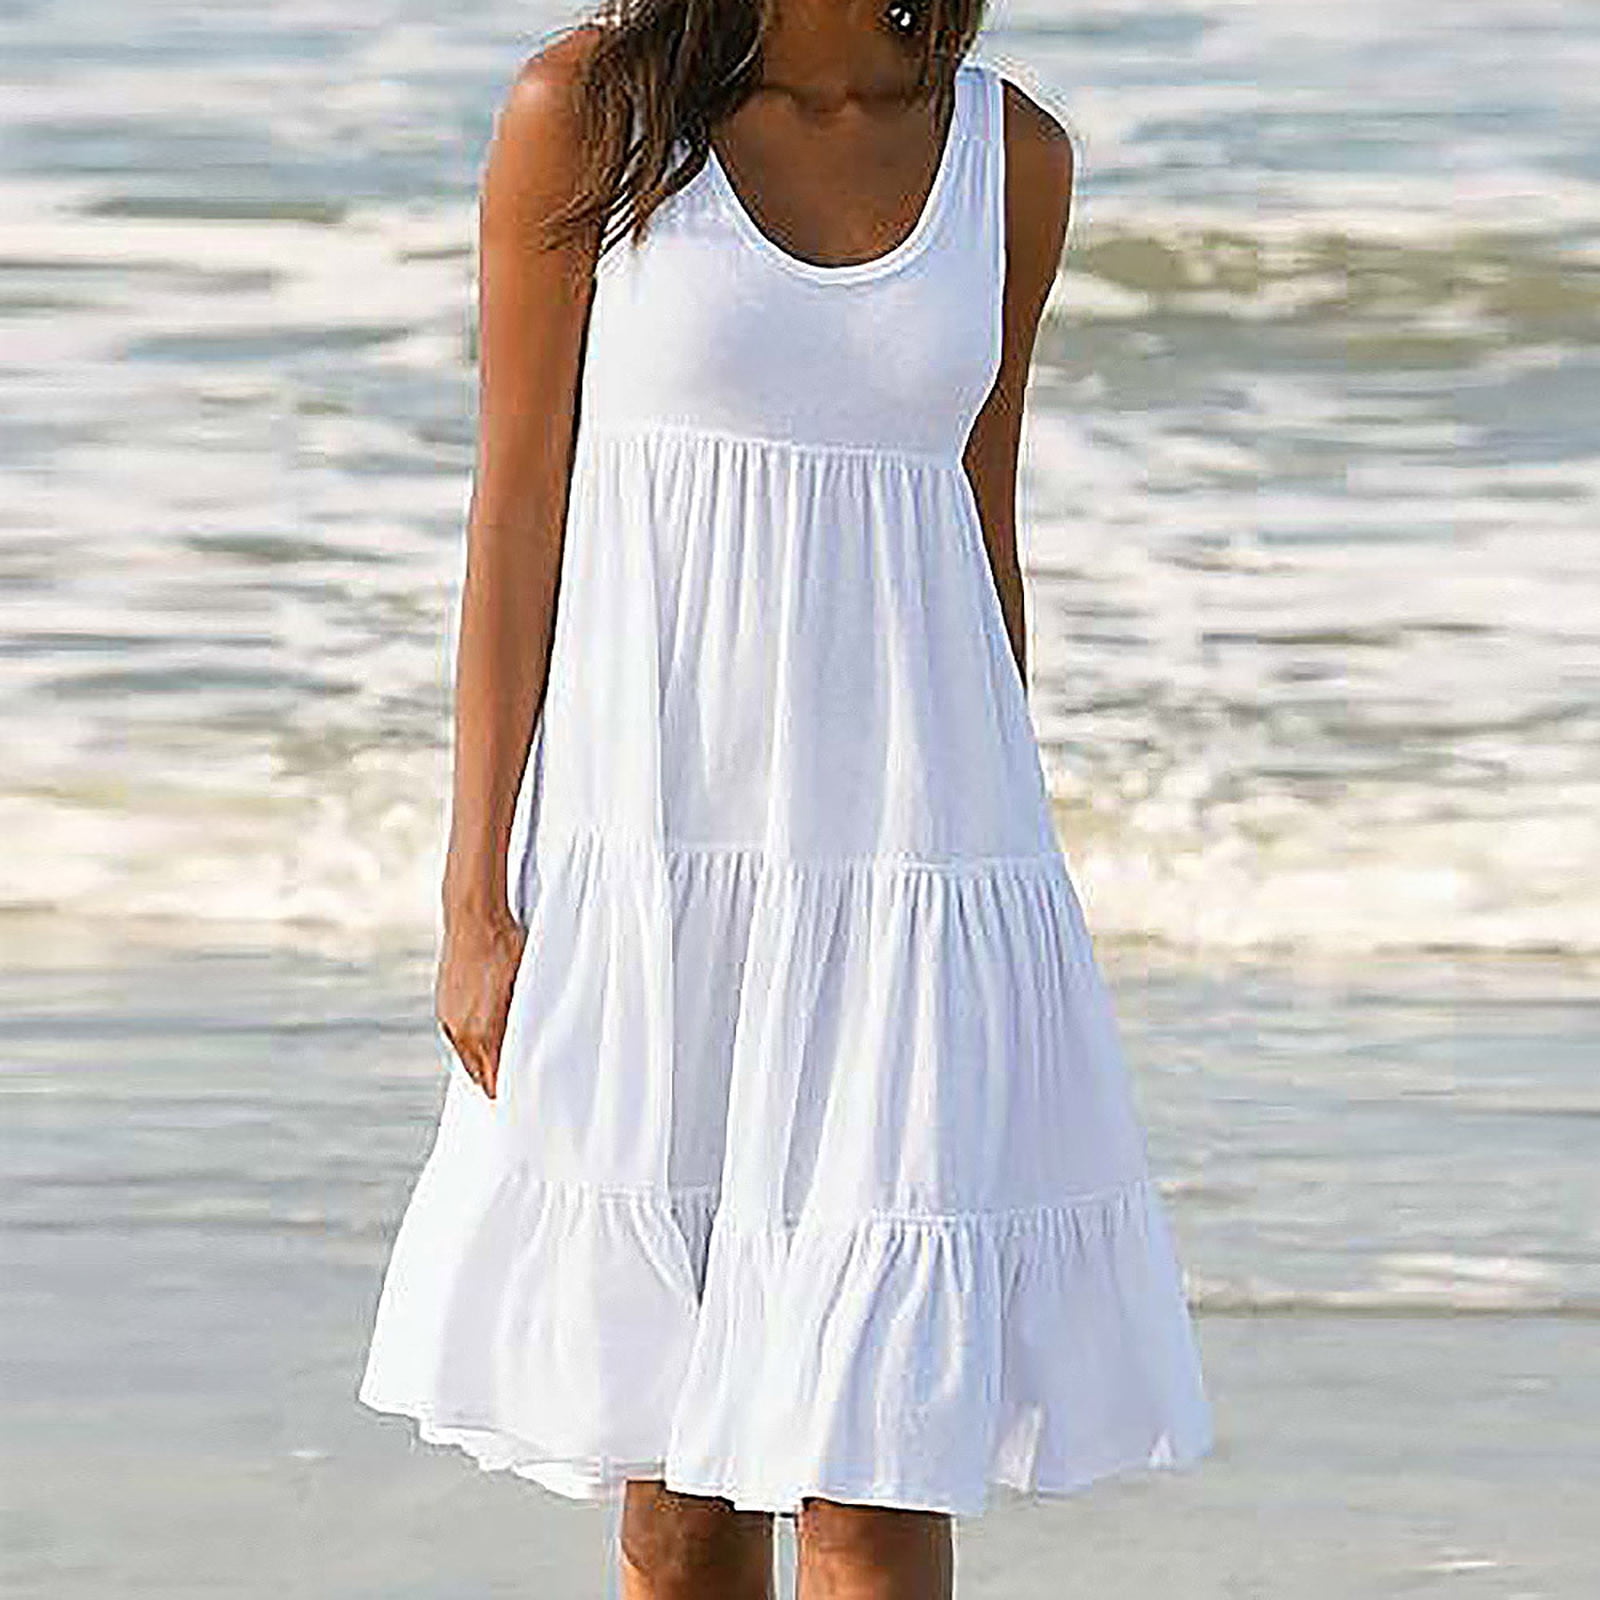 Chic Womens Holiday Irregular Halter Ladies Summer Beach Sleeveless Party Dress